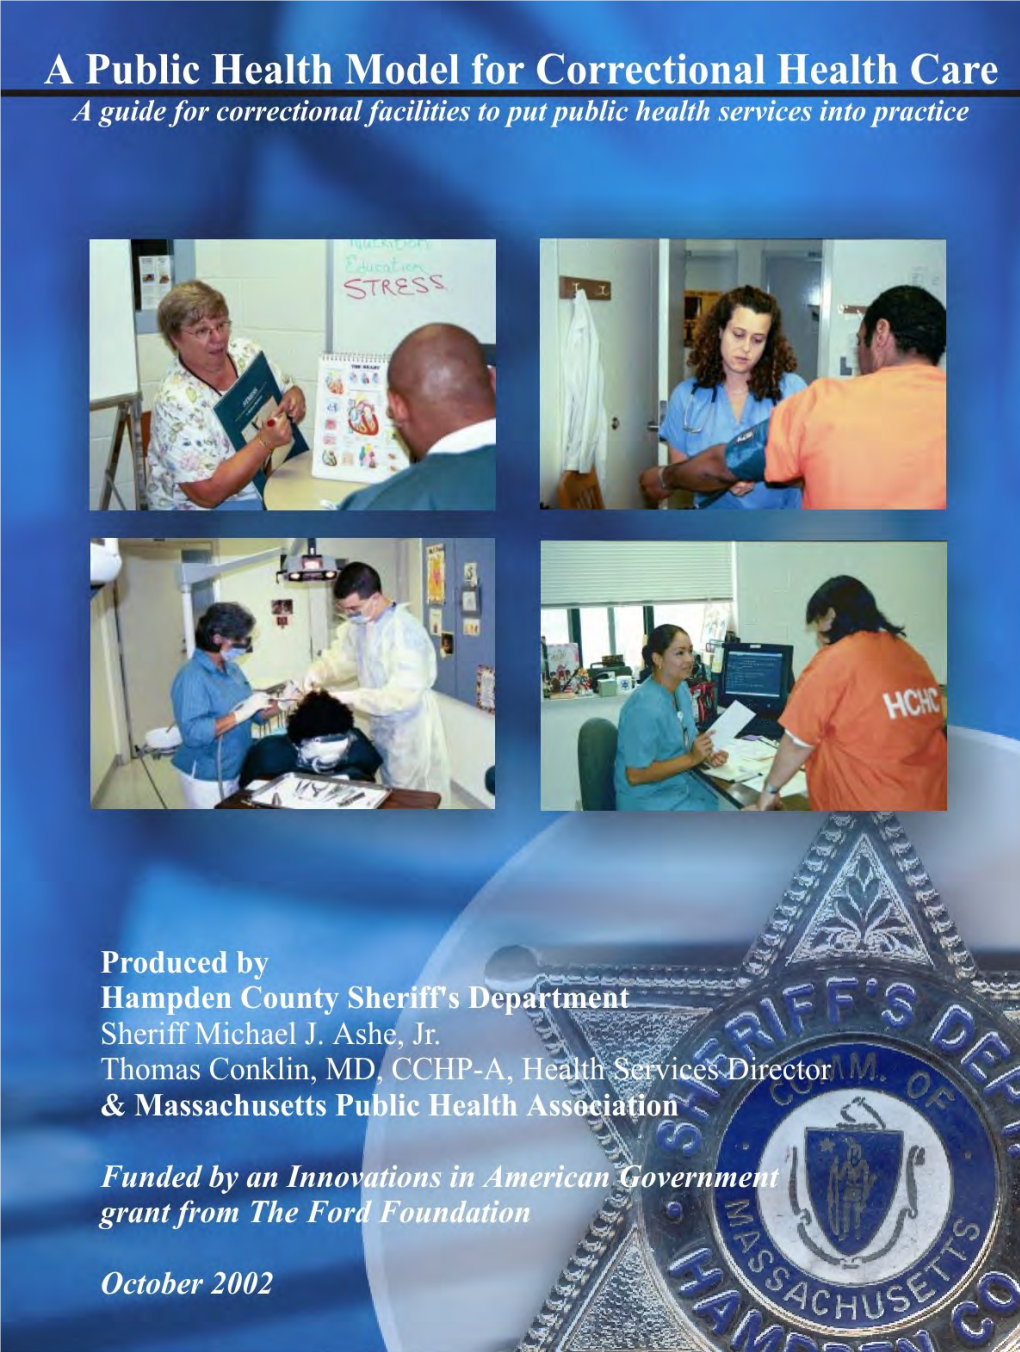 A Public Health Manual for Correctional Health Care